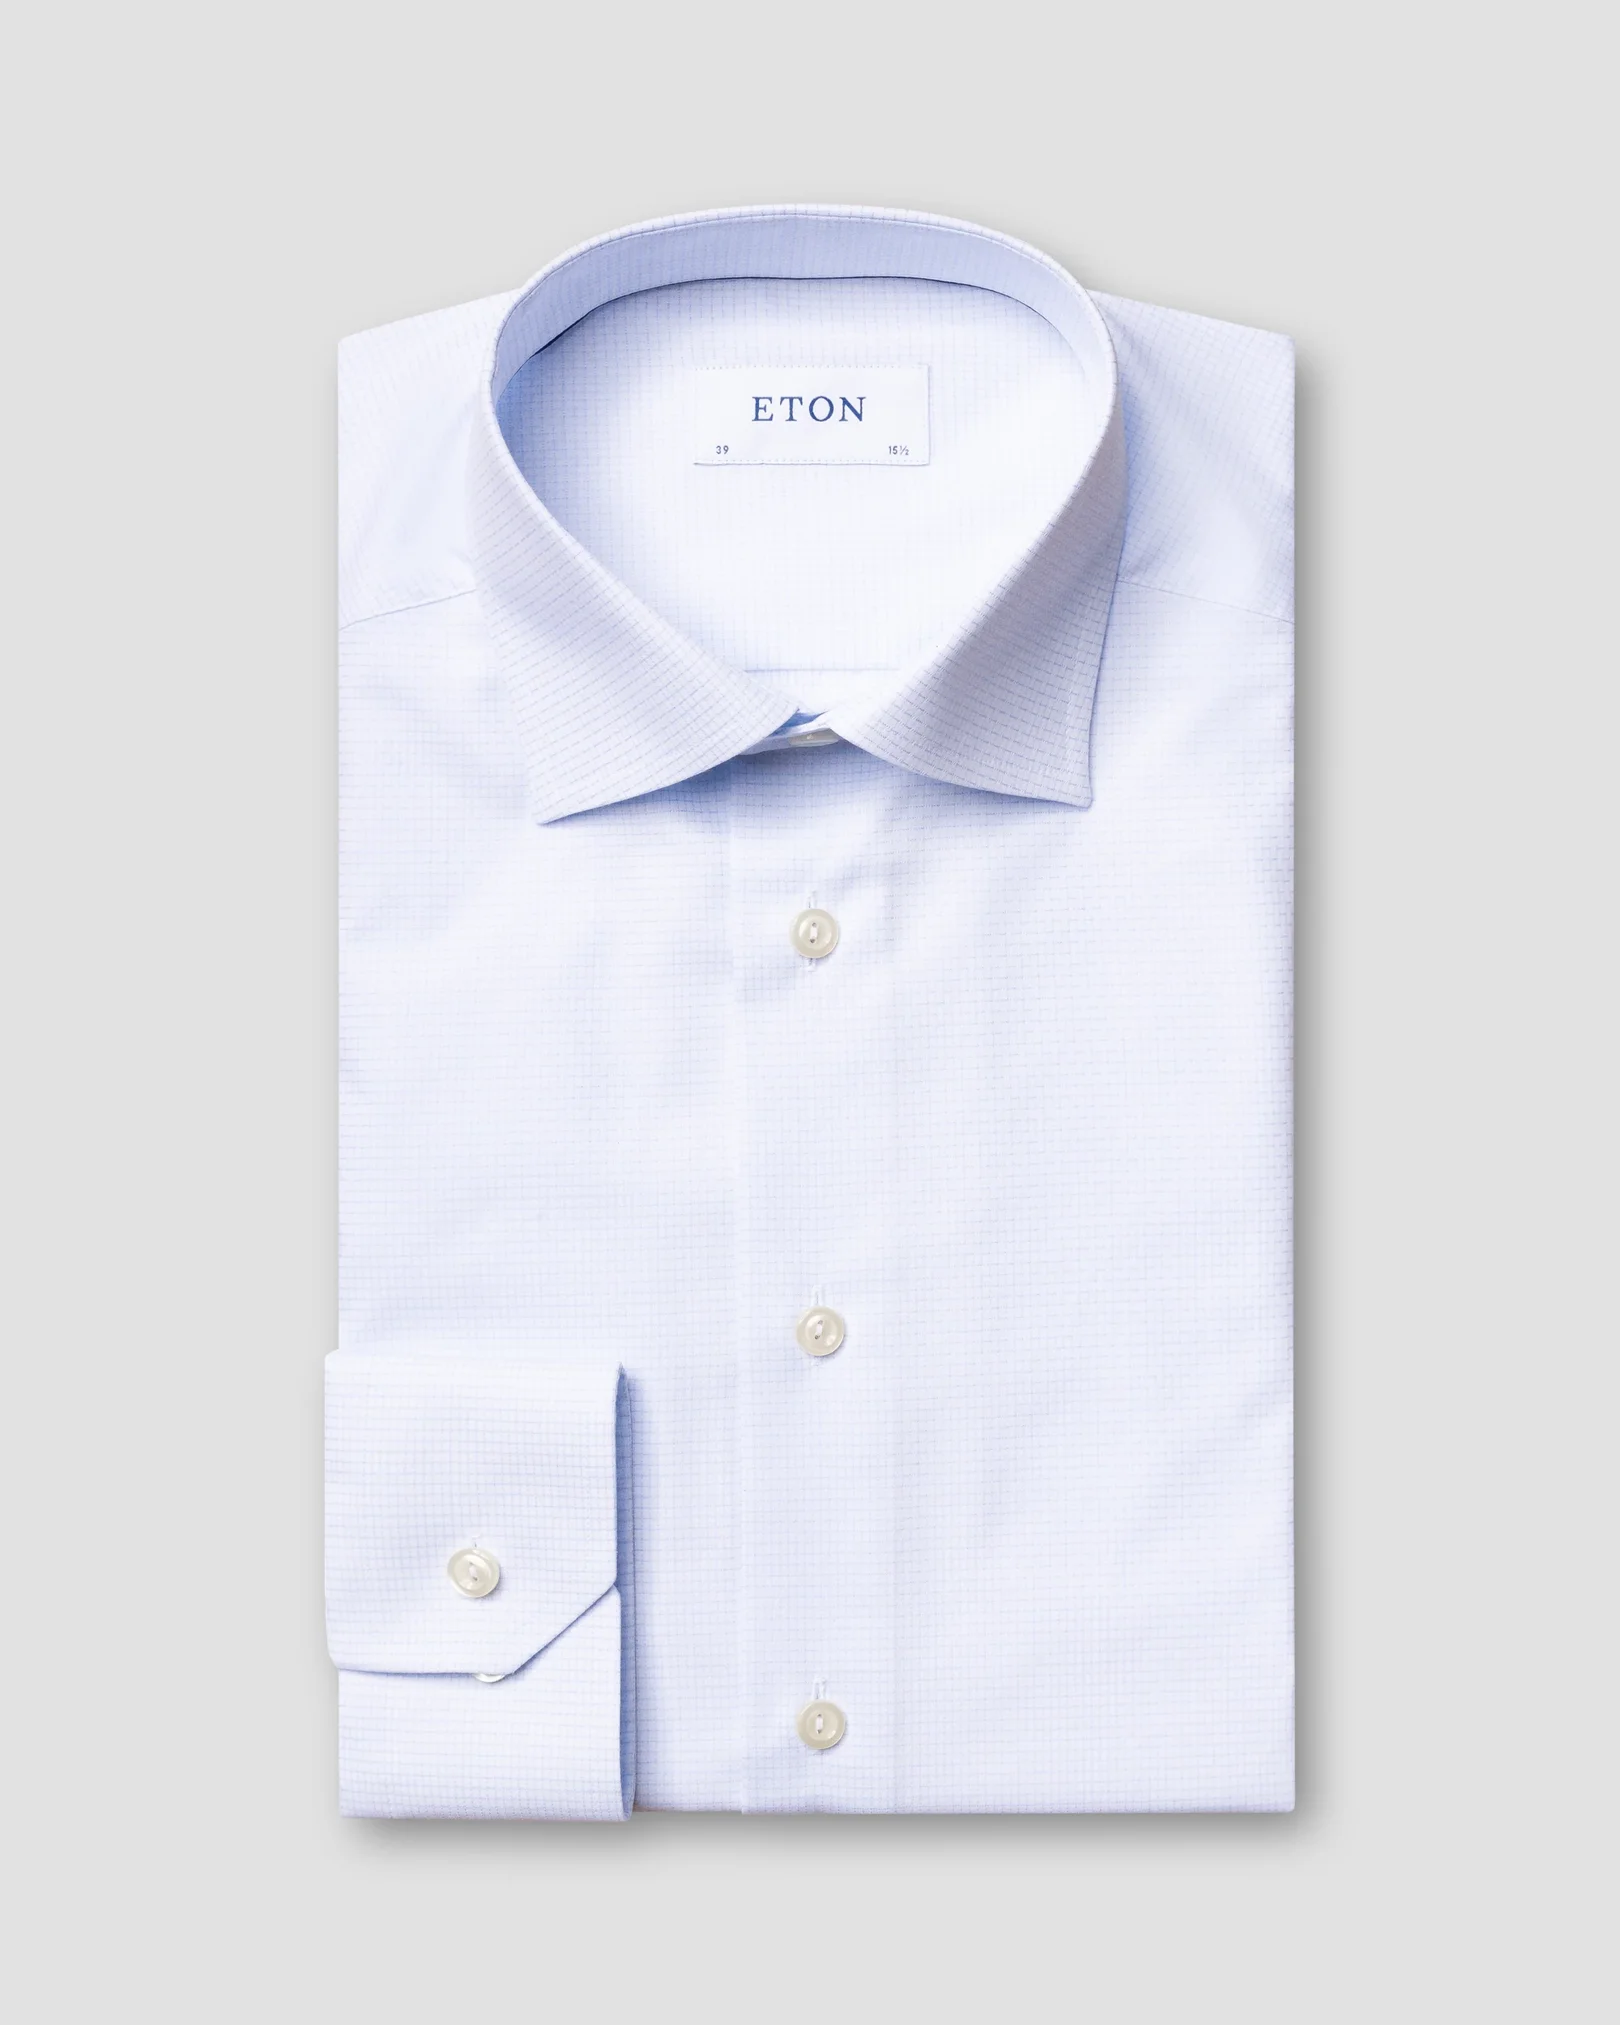 Eton - light blue checked shirt navy details